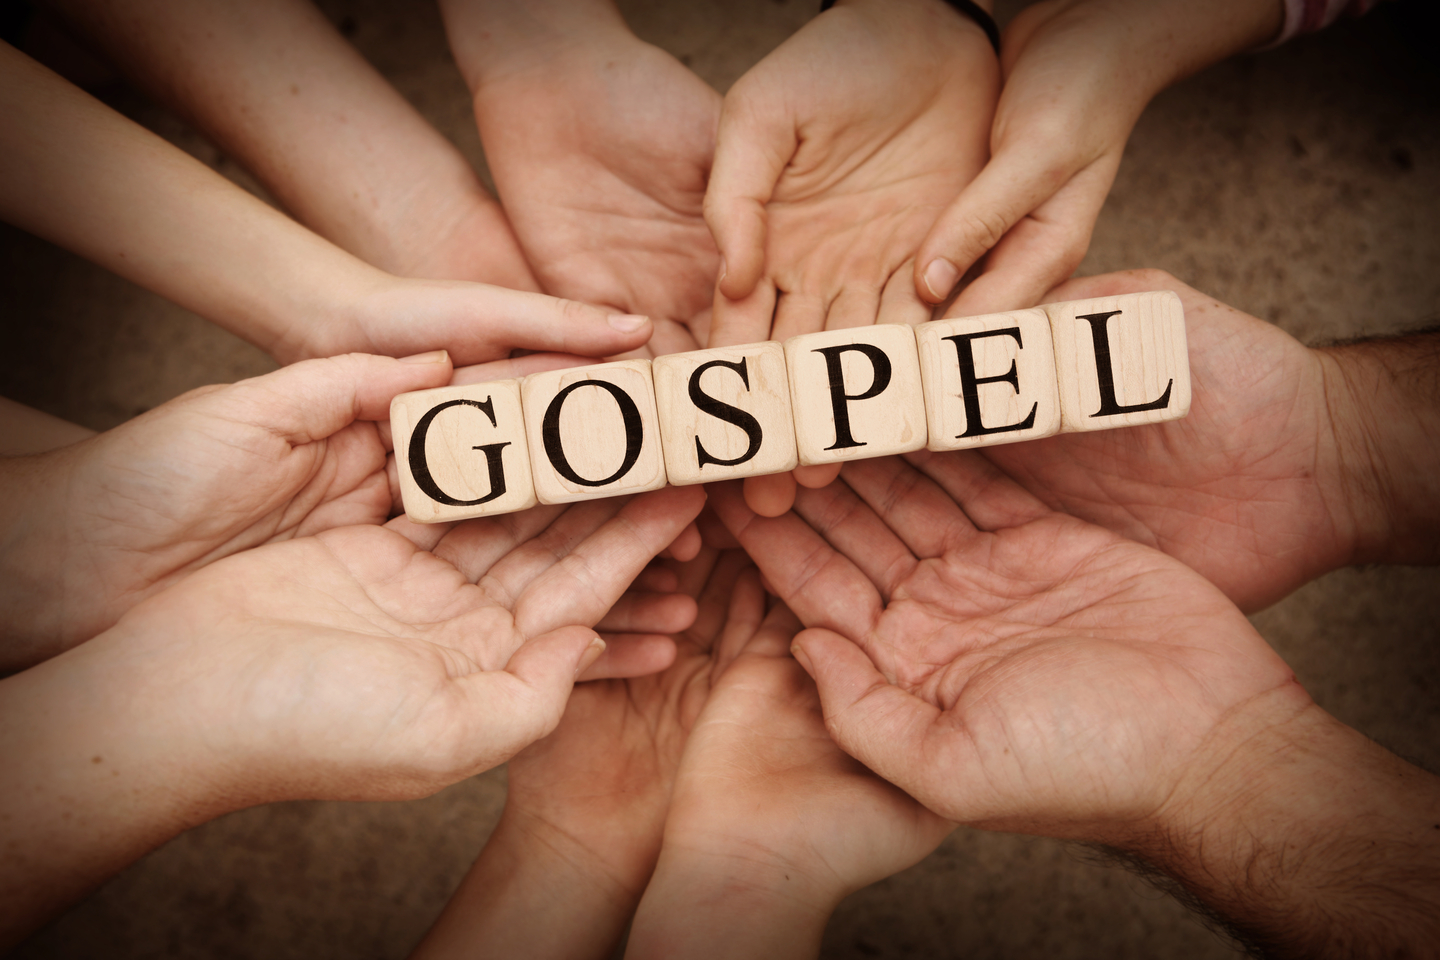 Team Holding Building Blocks spelling out Gospel